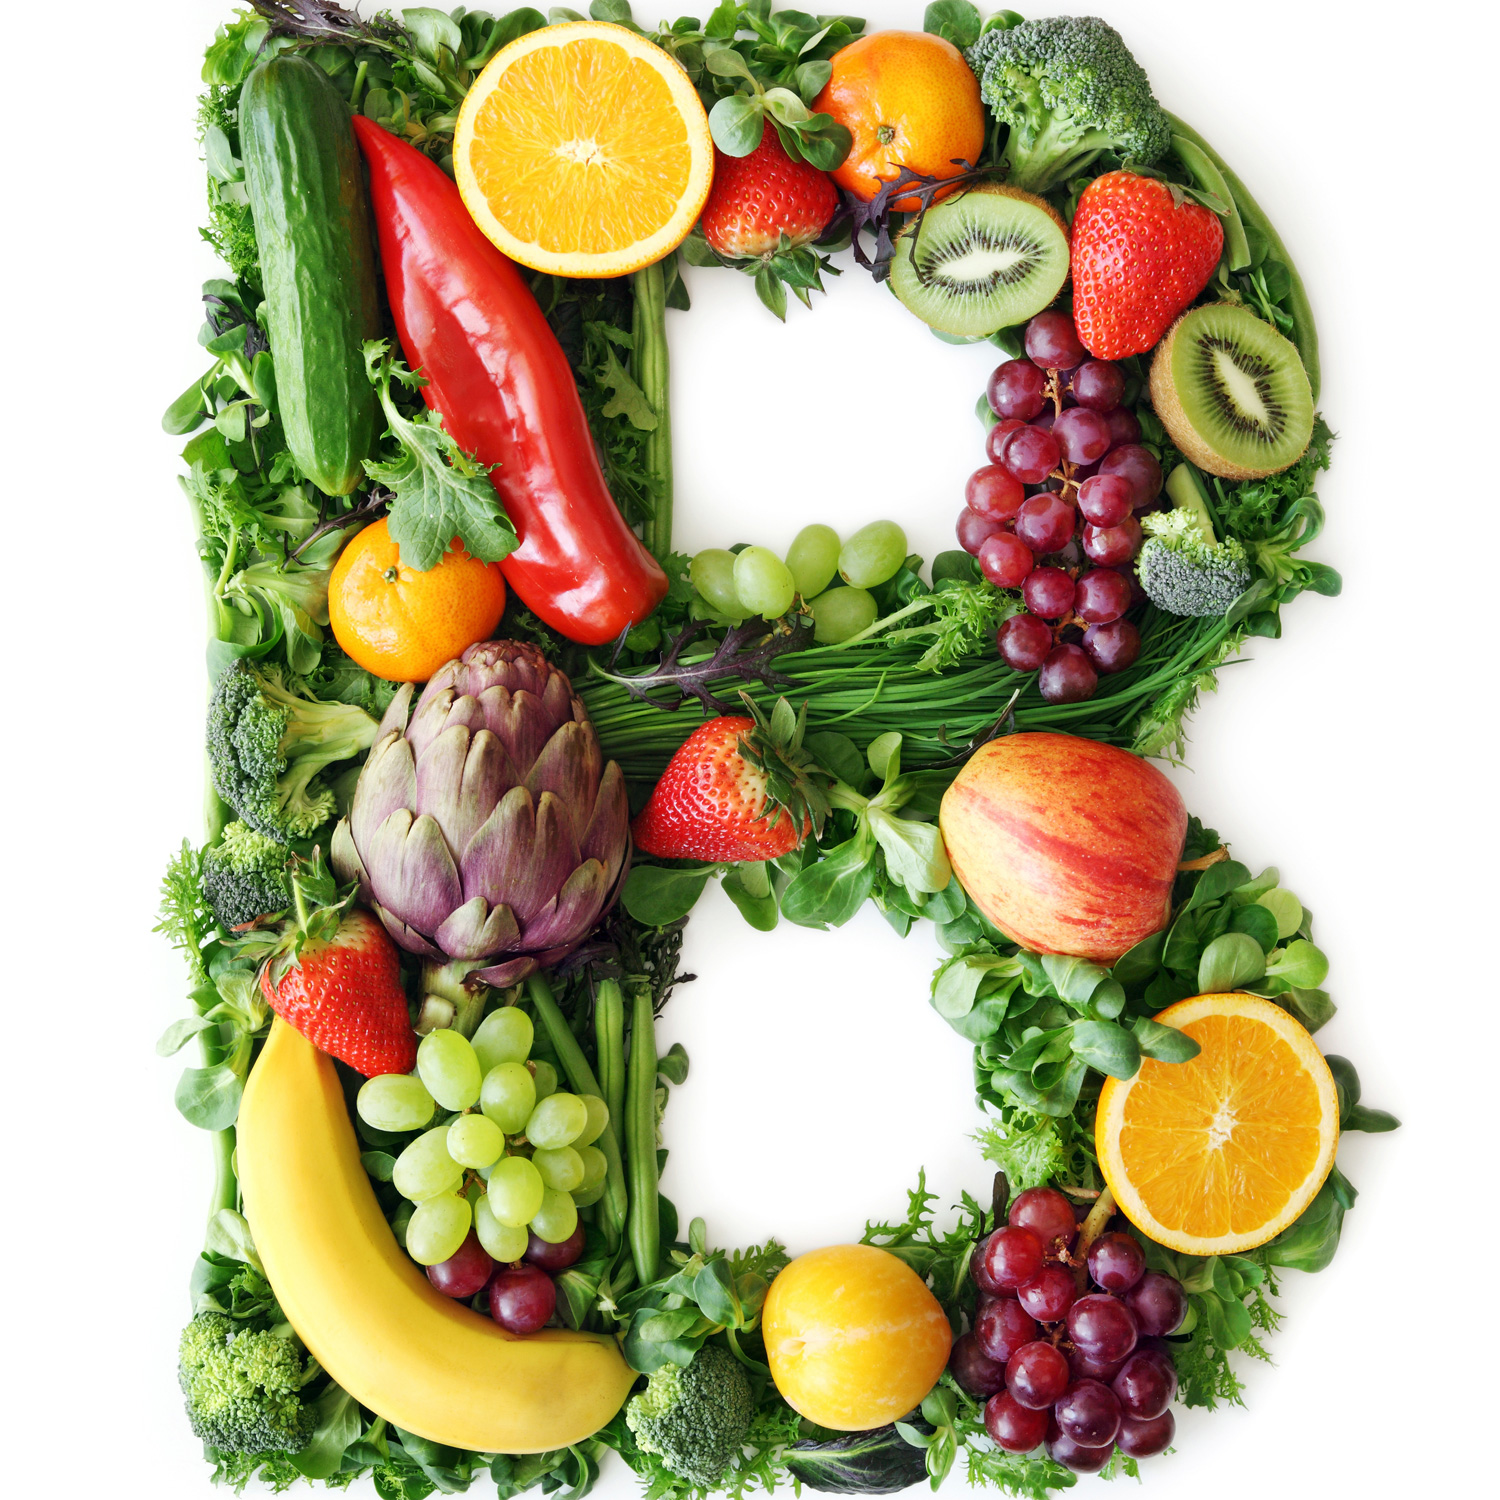 b-vitamin-fruits-vegetables-diet